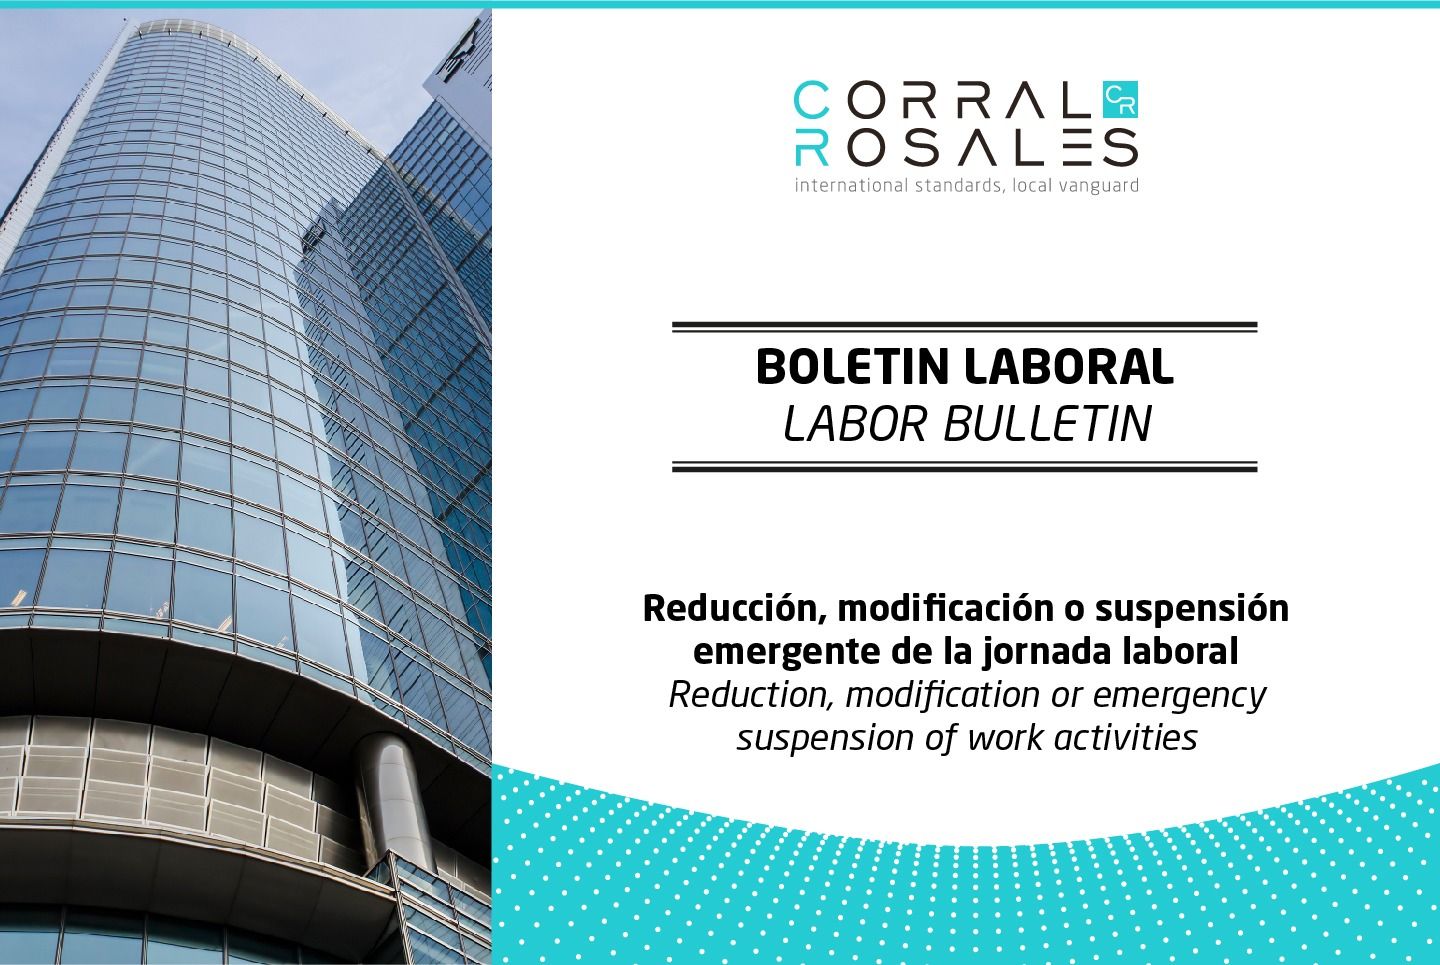 work-activities-reduction-modification-suspension-Covid-19-labor